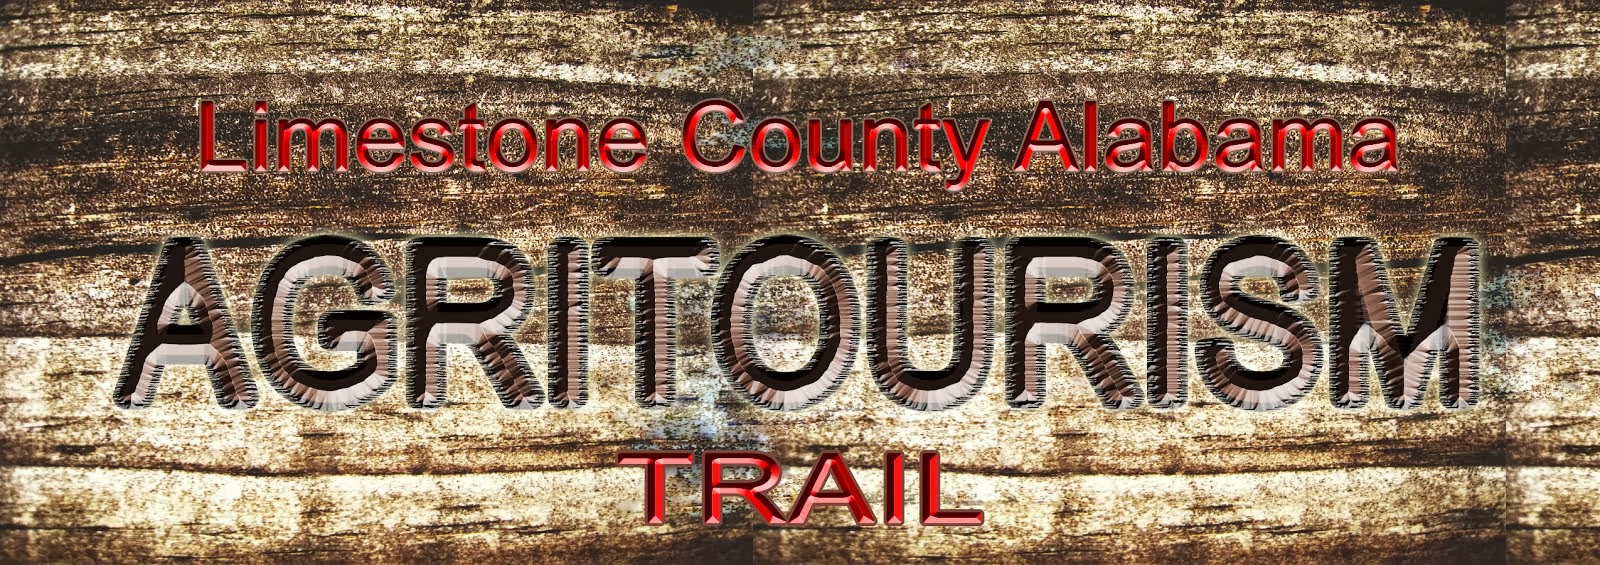 Limestone County Alabama Agritourism Trail